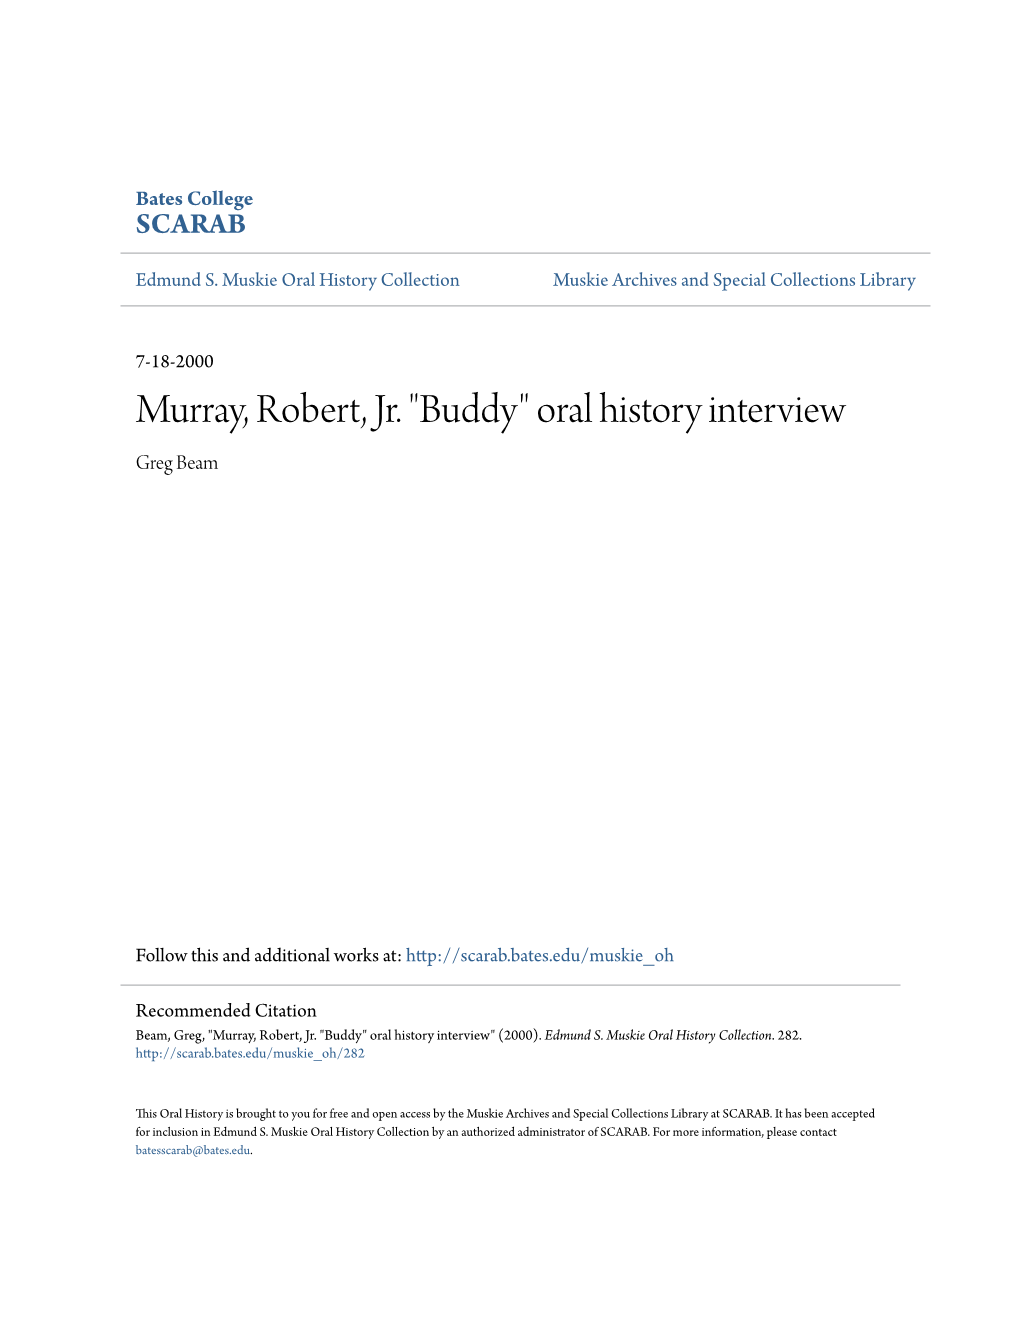 Murray, Robert, Jr. "Buddy" Oral History Interview Greg Beam